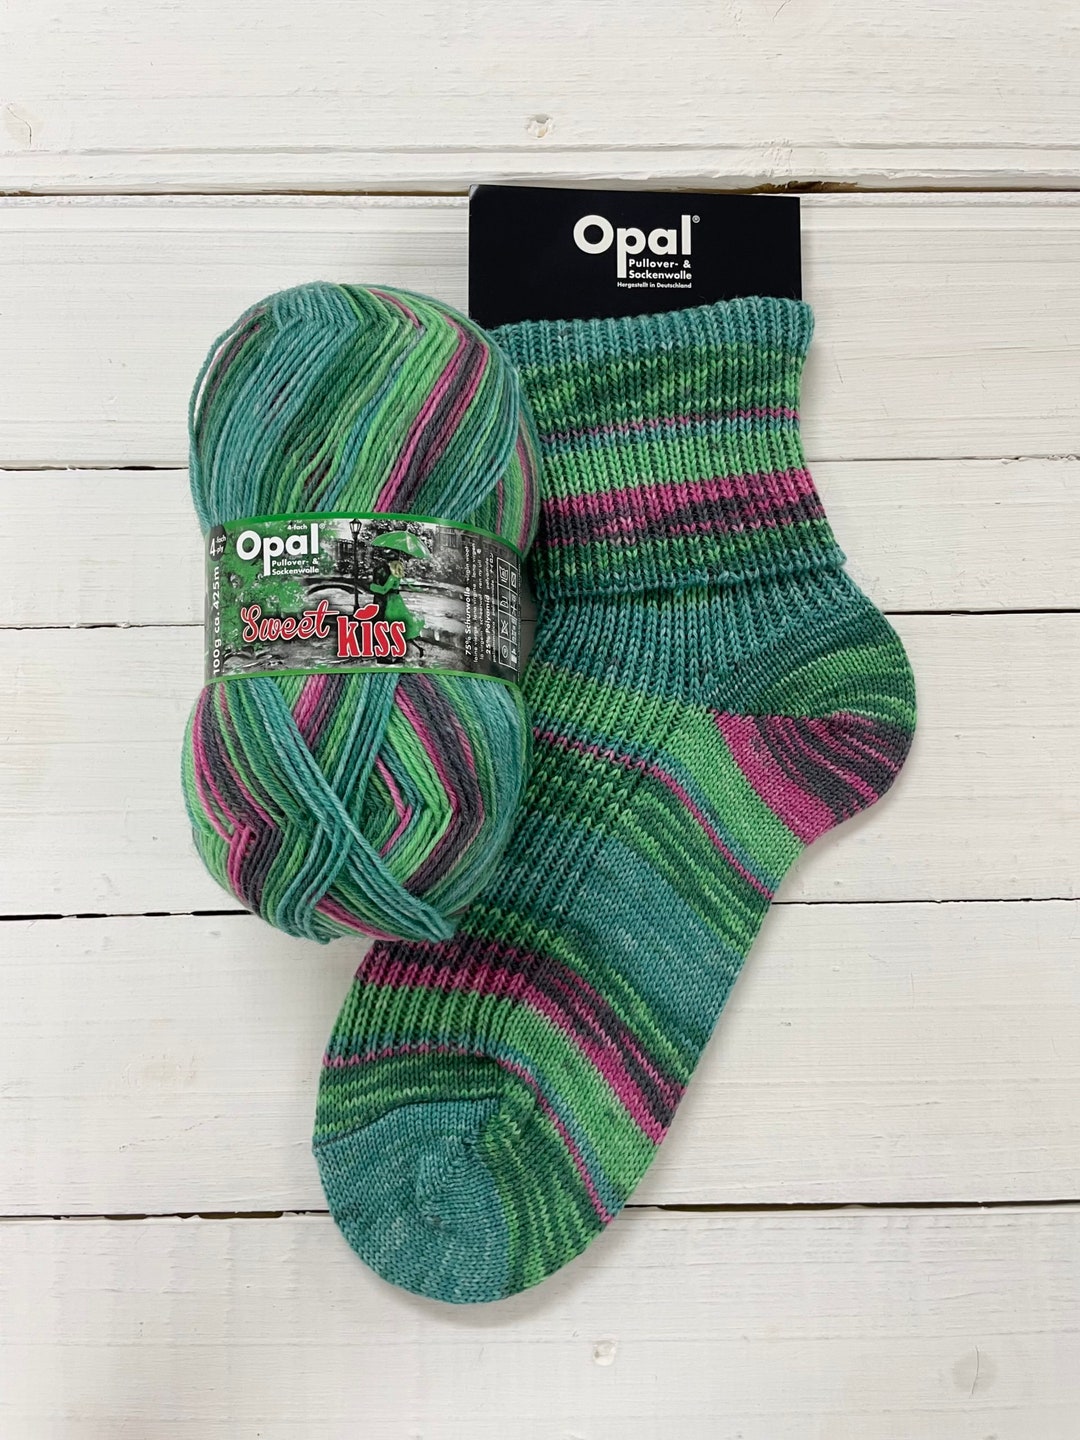 Opal Sock Yarn Sweet Kiss 4ply 100g 11262 - Etsy